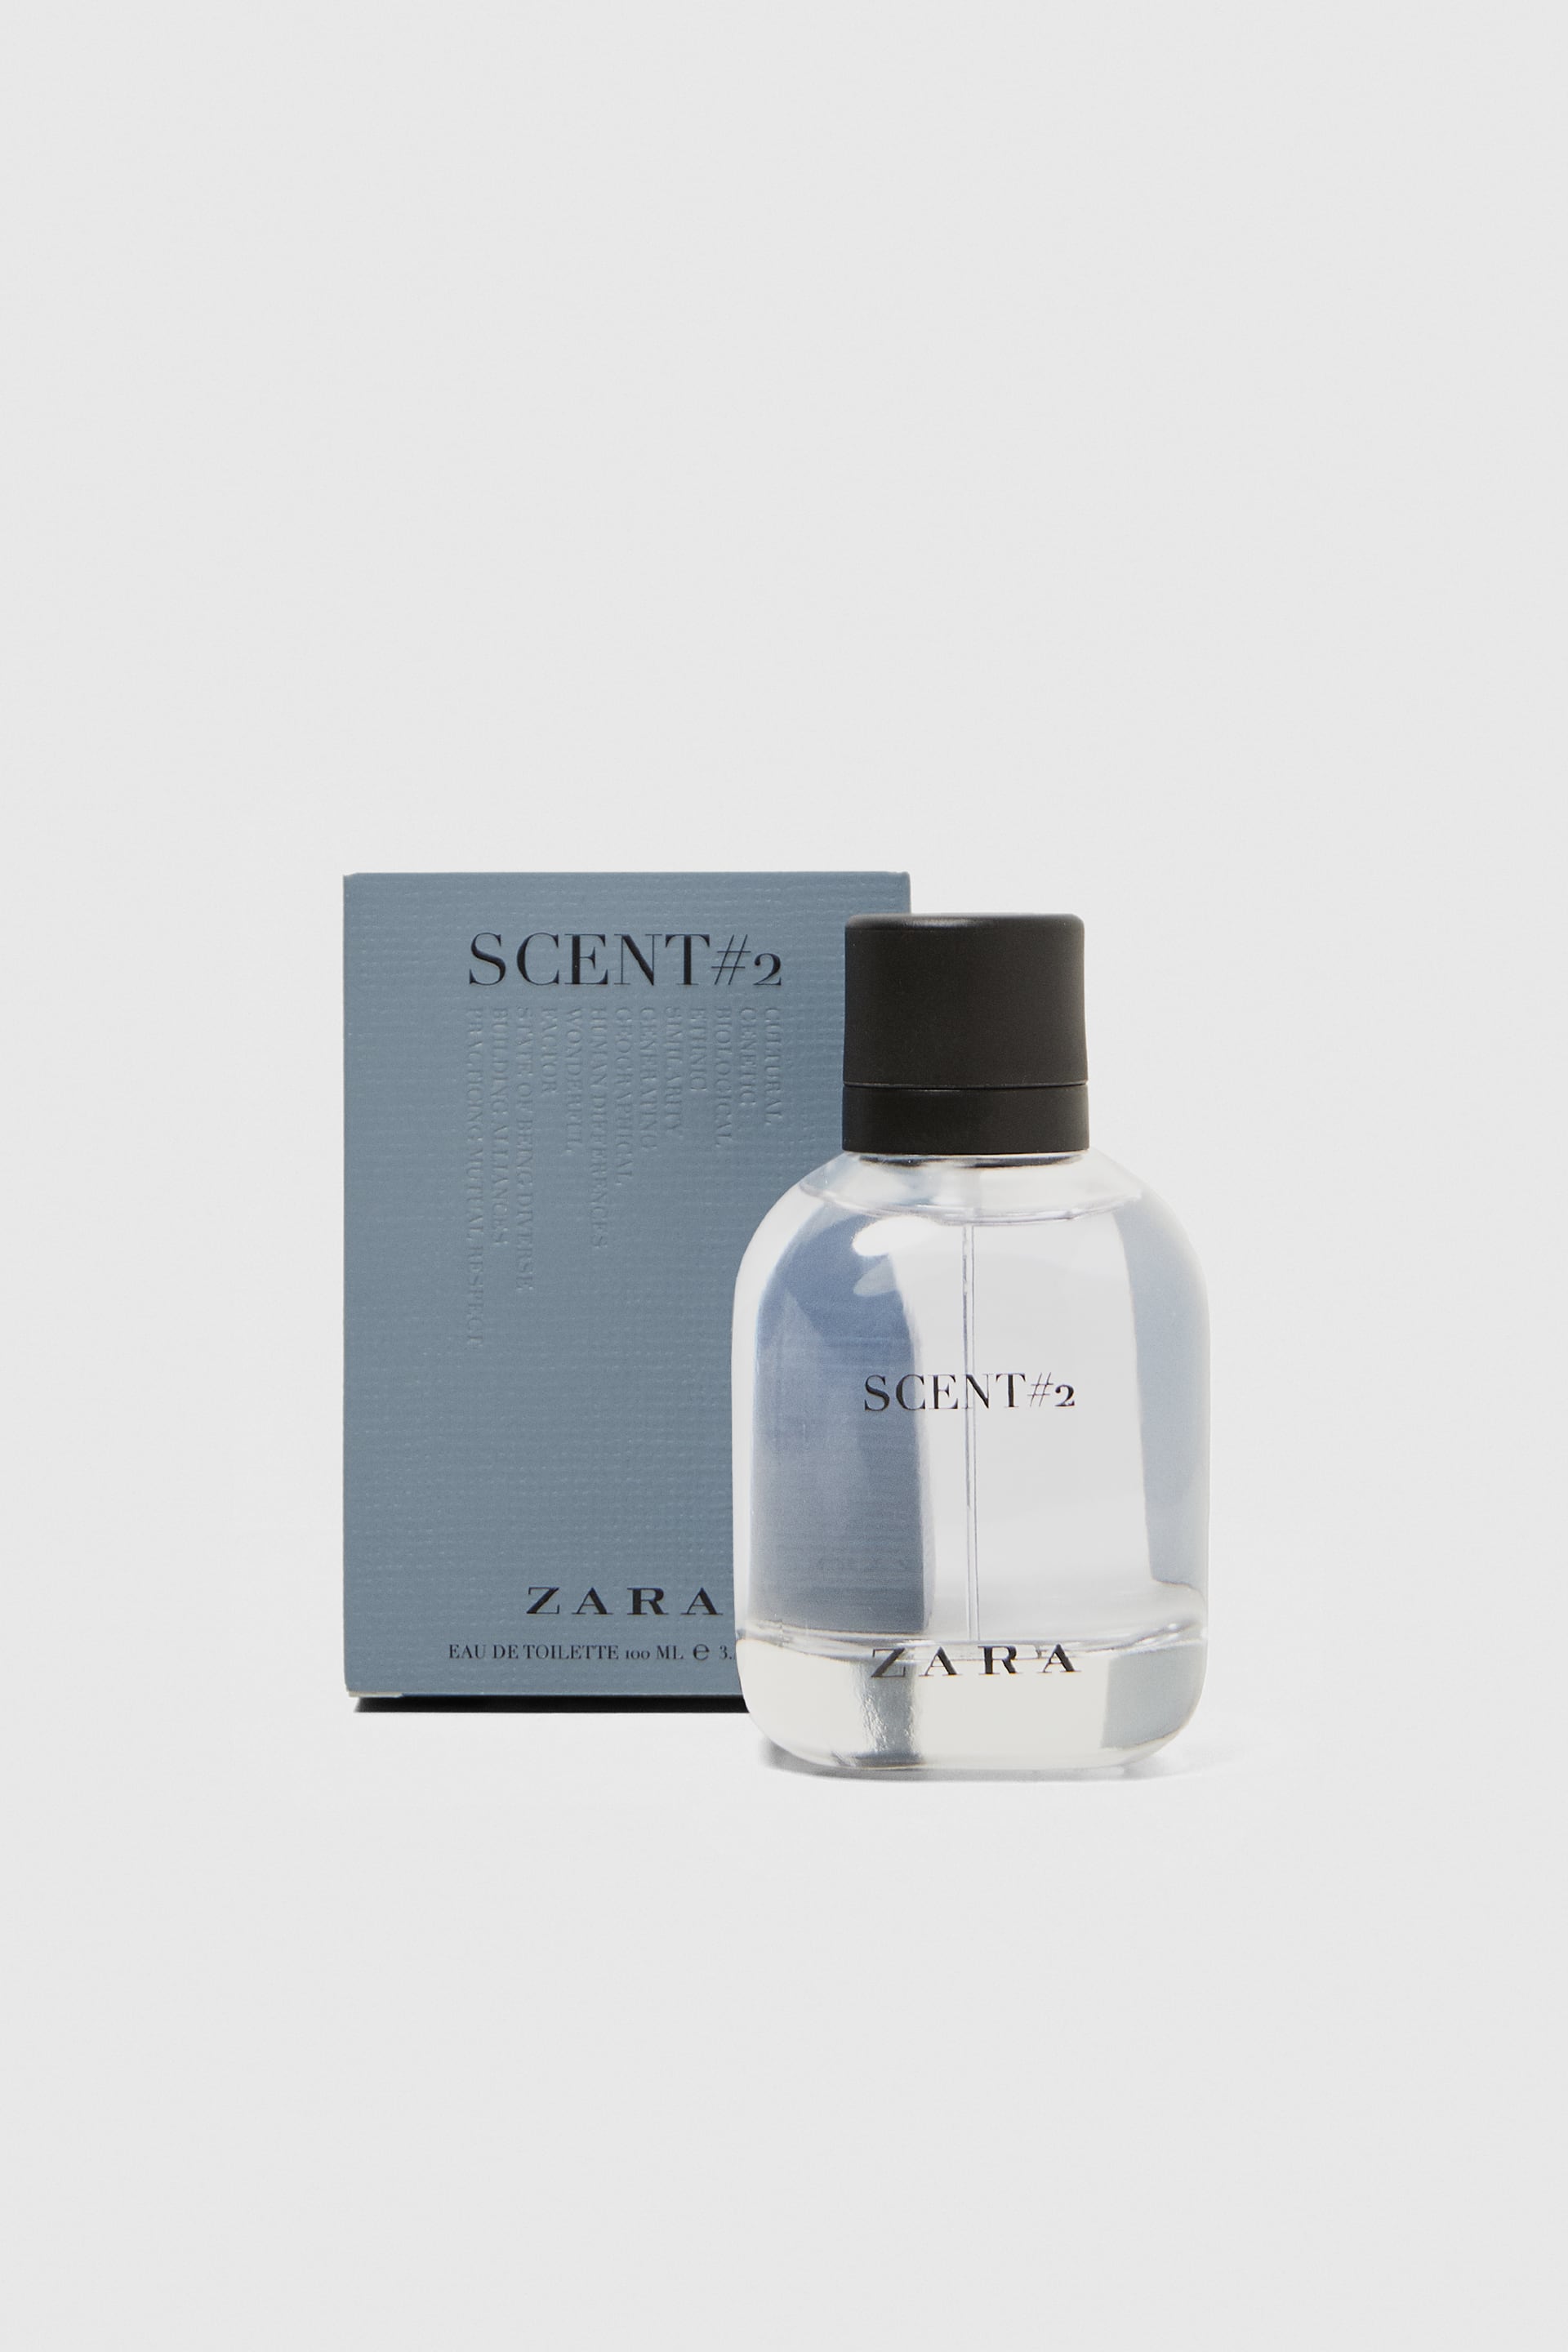 Scent #2 Zara cologne - a new fragrance 